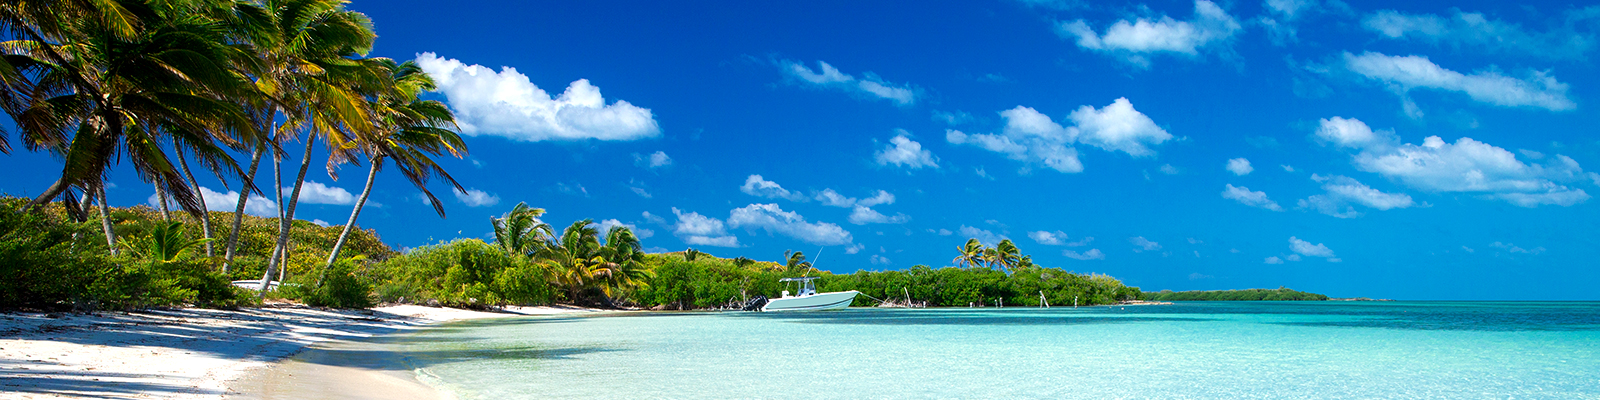 Ocean Cruises in the Caribbean